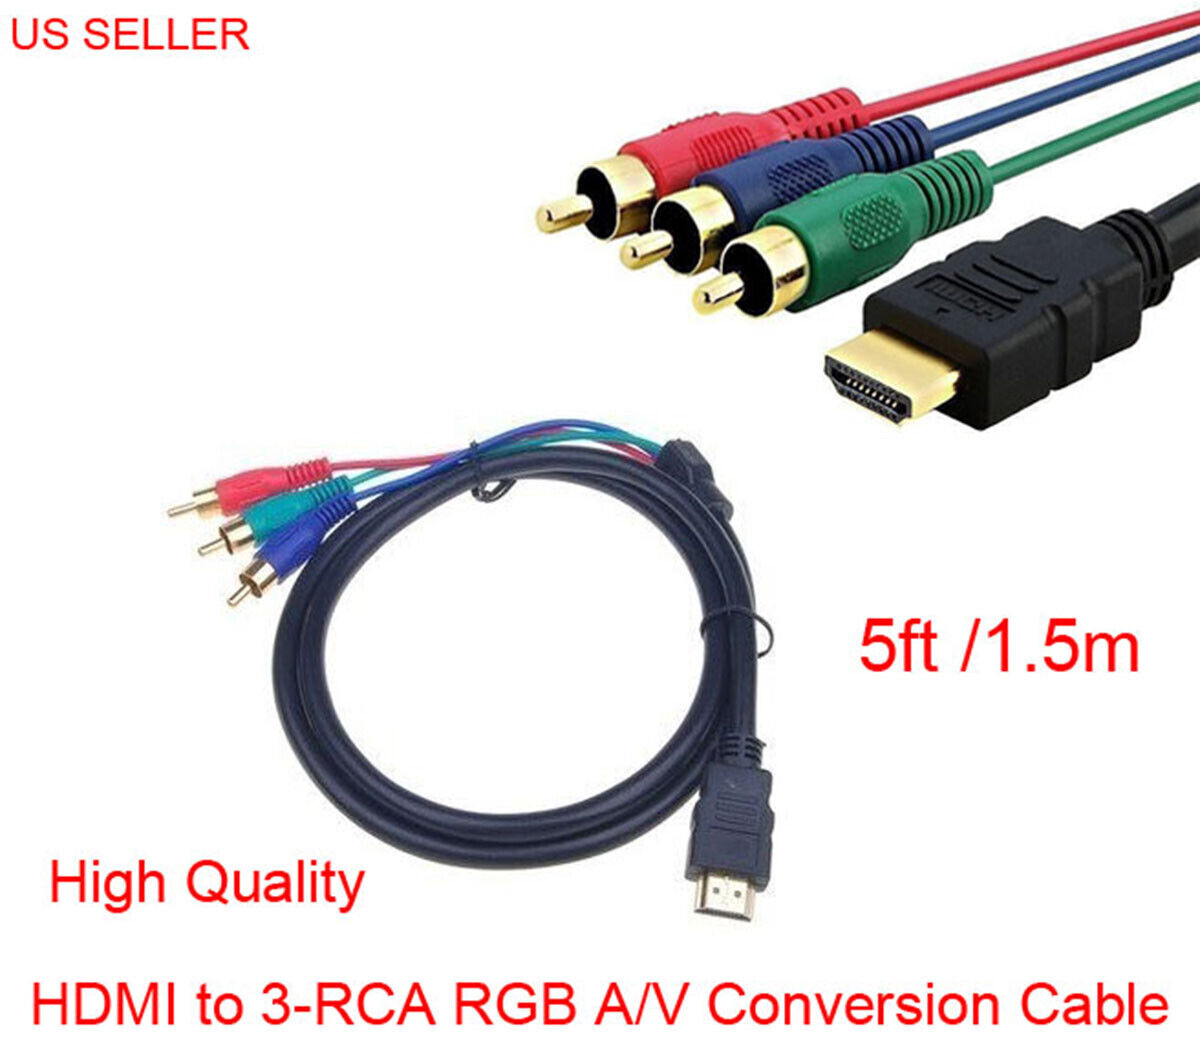 3. Check The Hdmi Cable